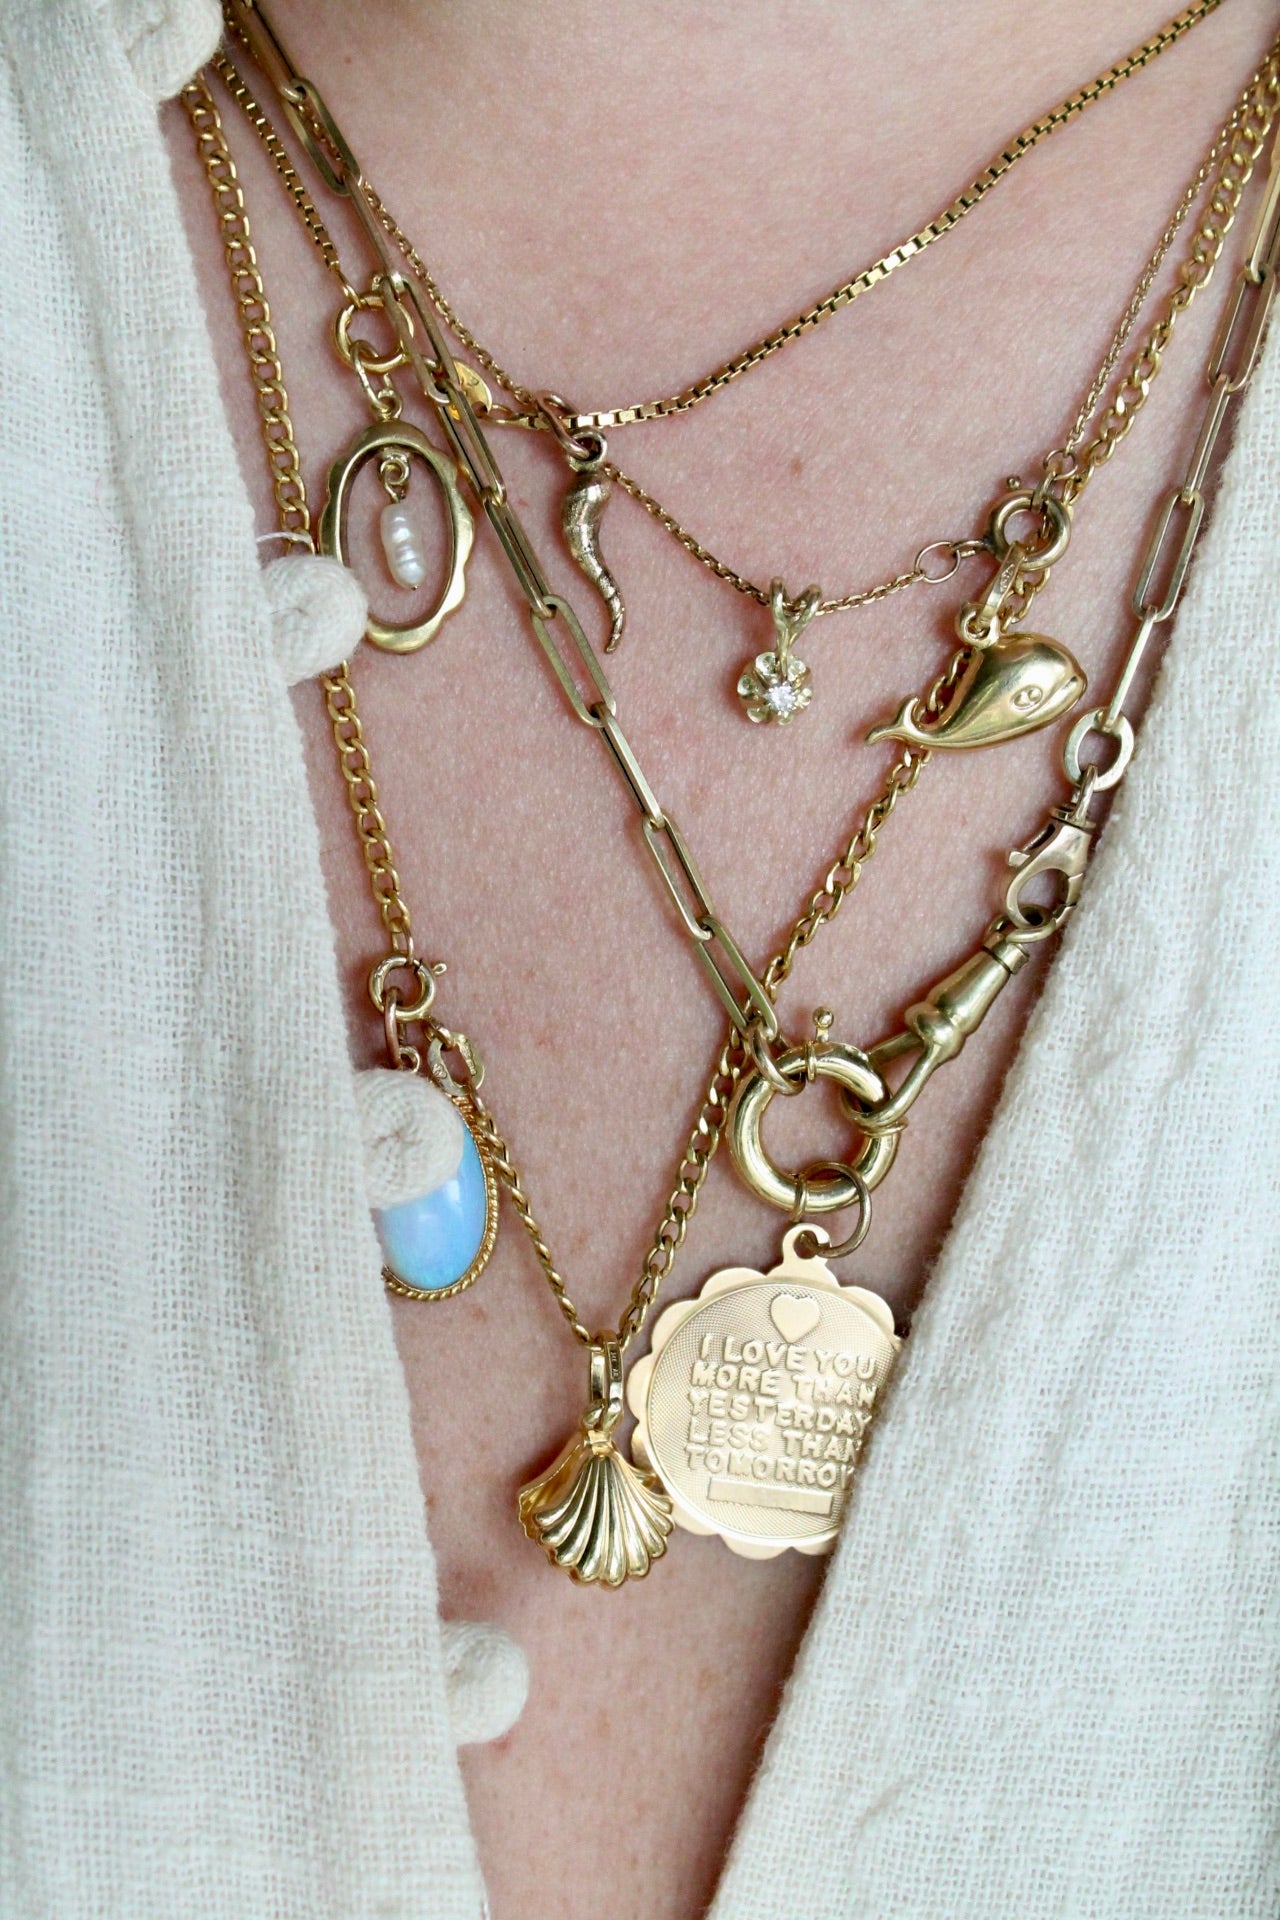 Baroque Pearl Pendant